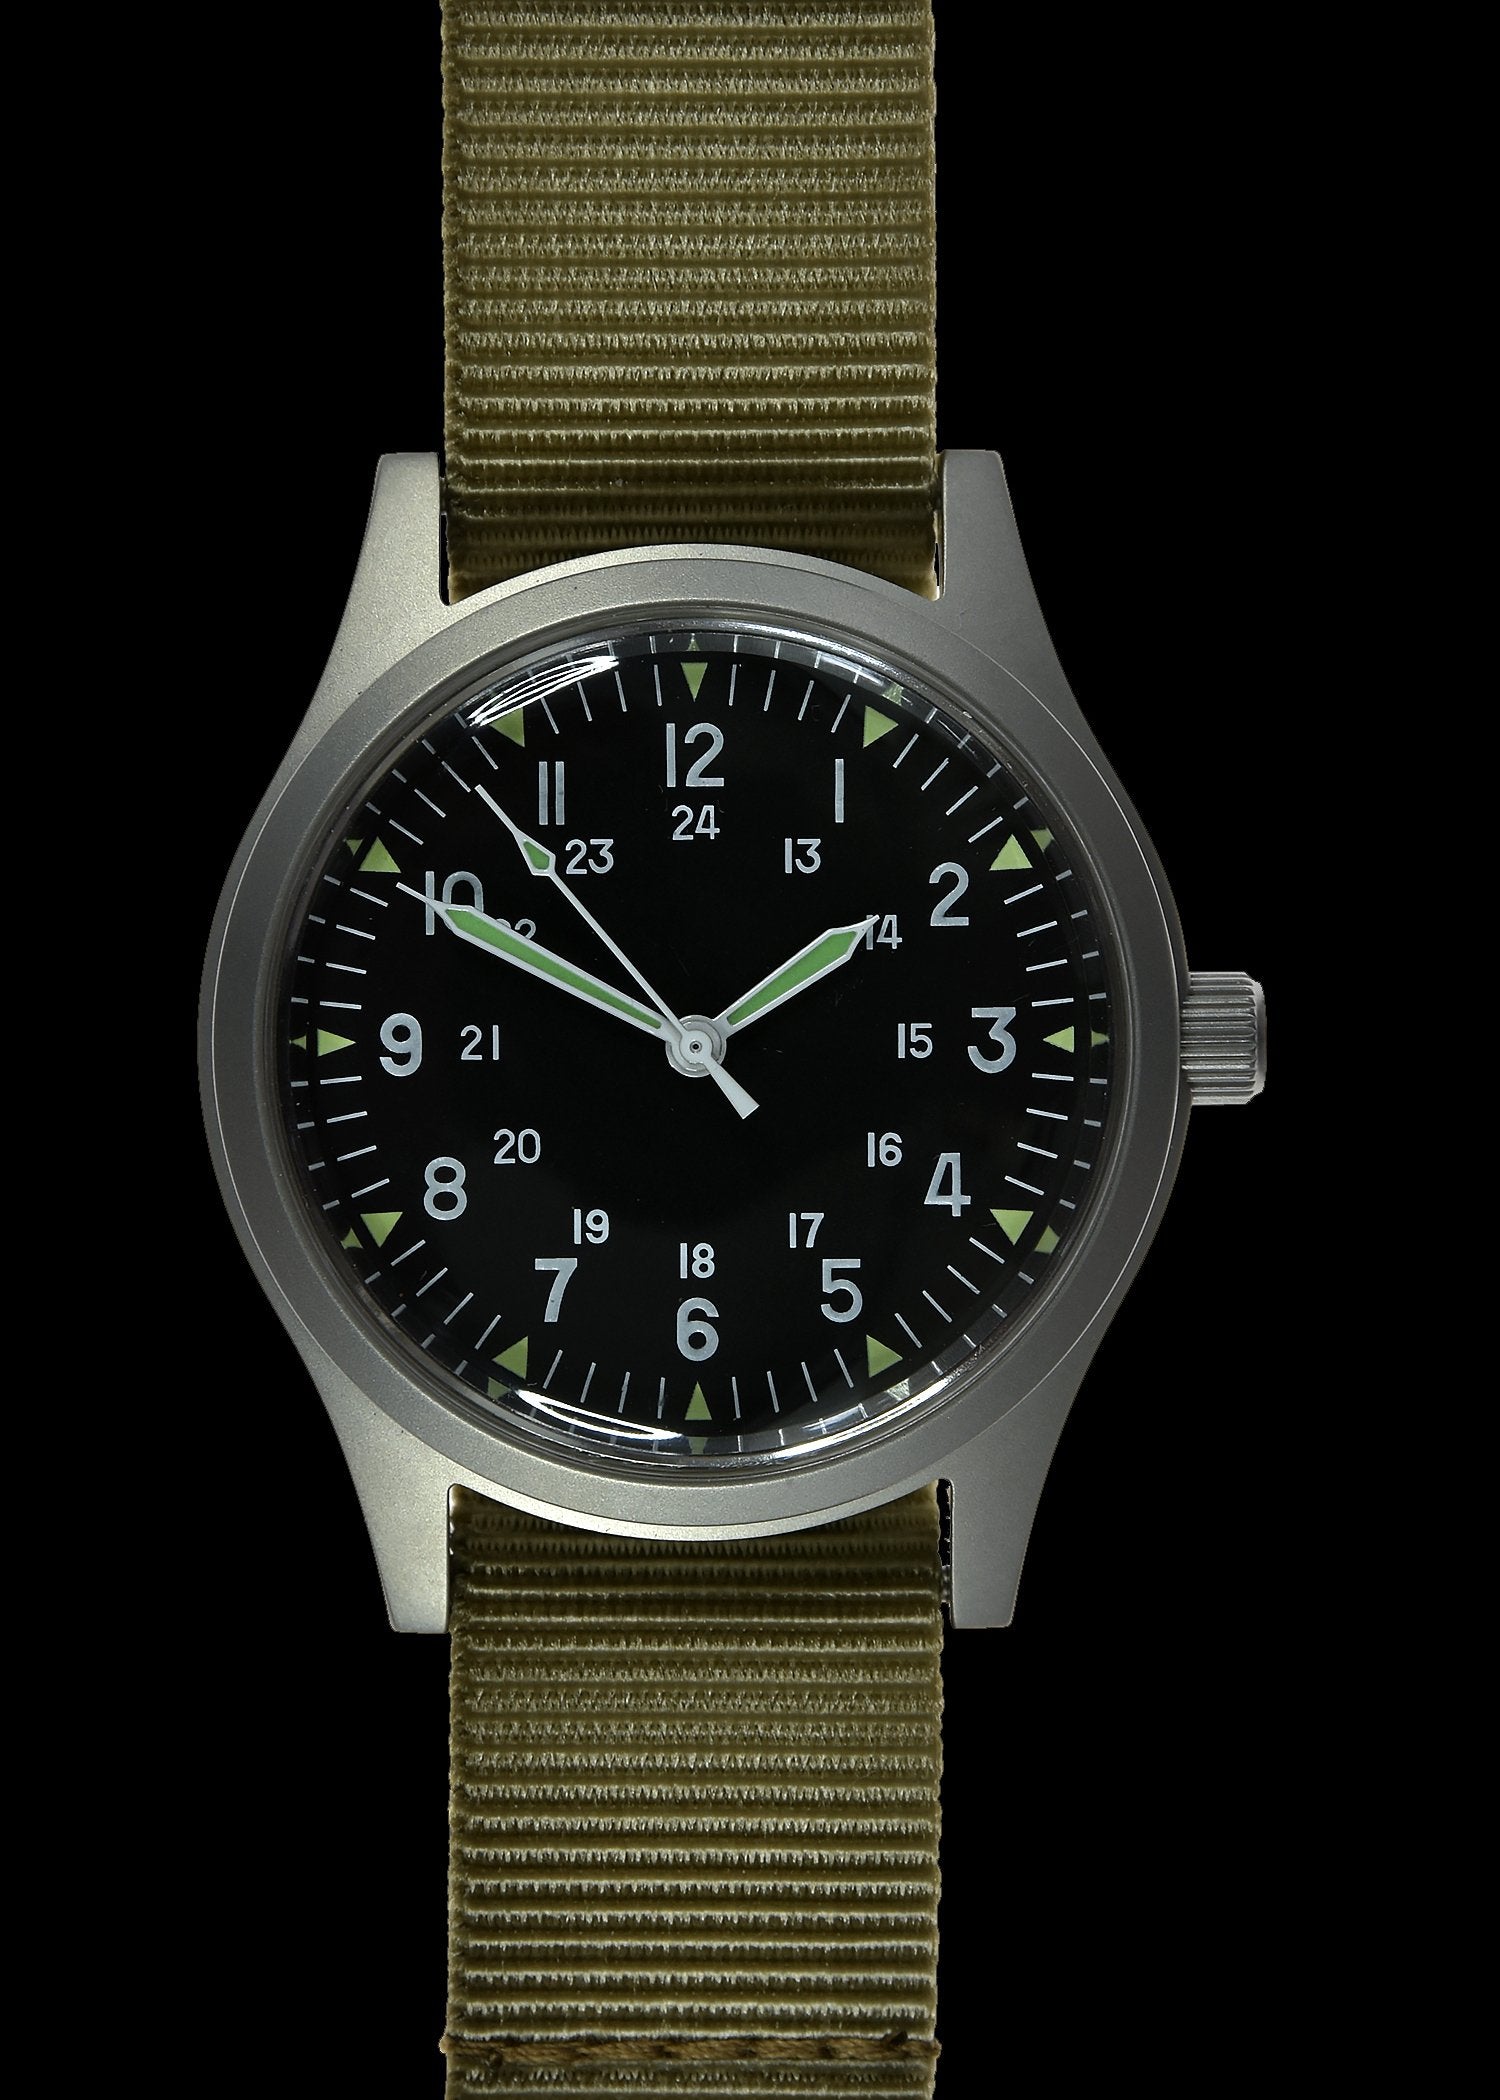 GG-W-113 US 1960s Pattern Watch (Automatic or Quartz)